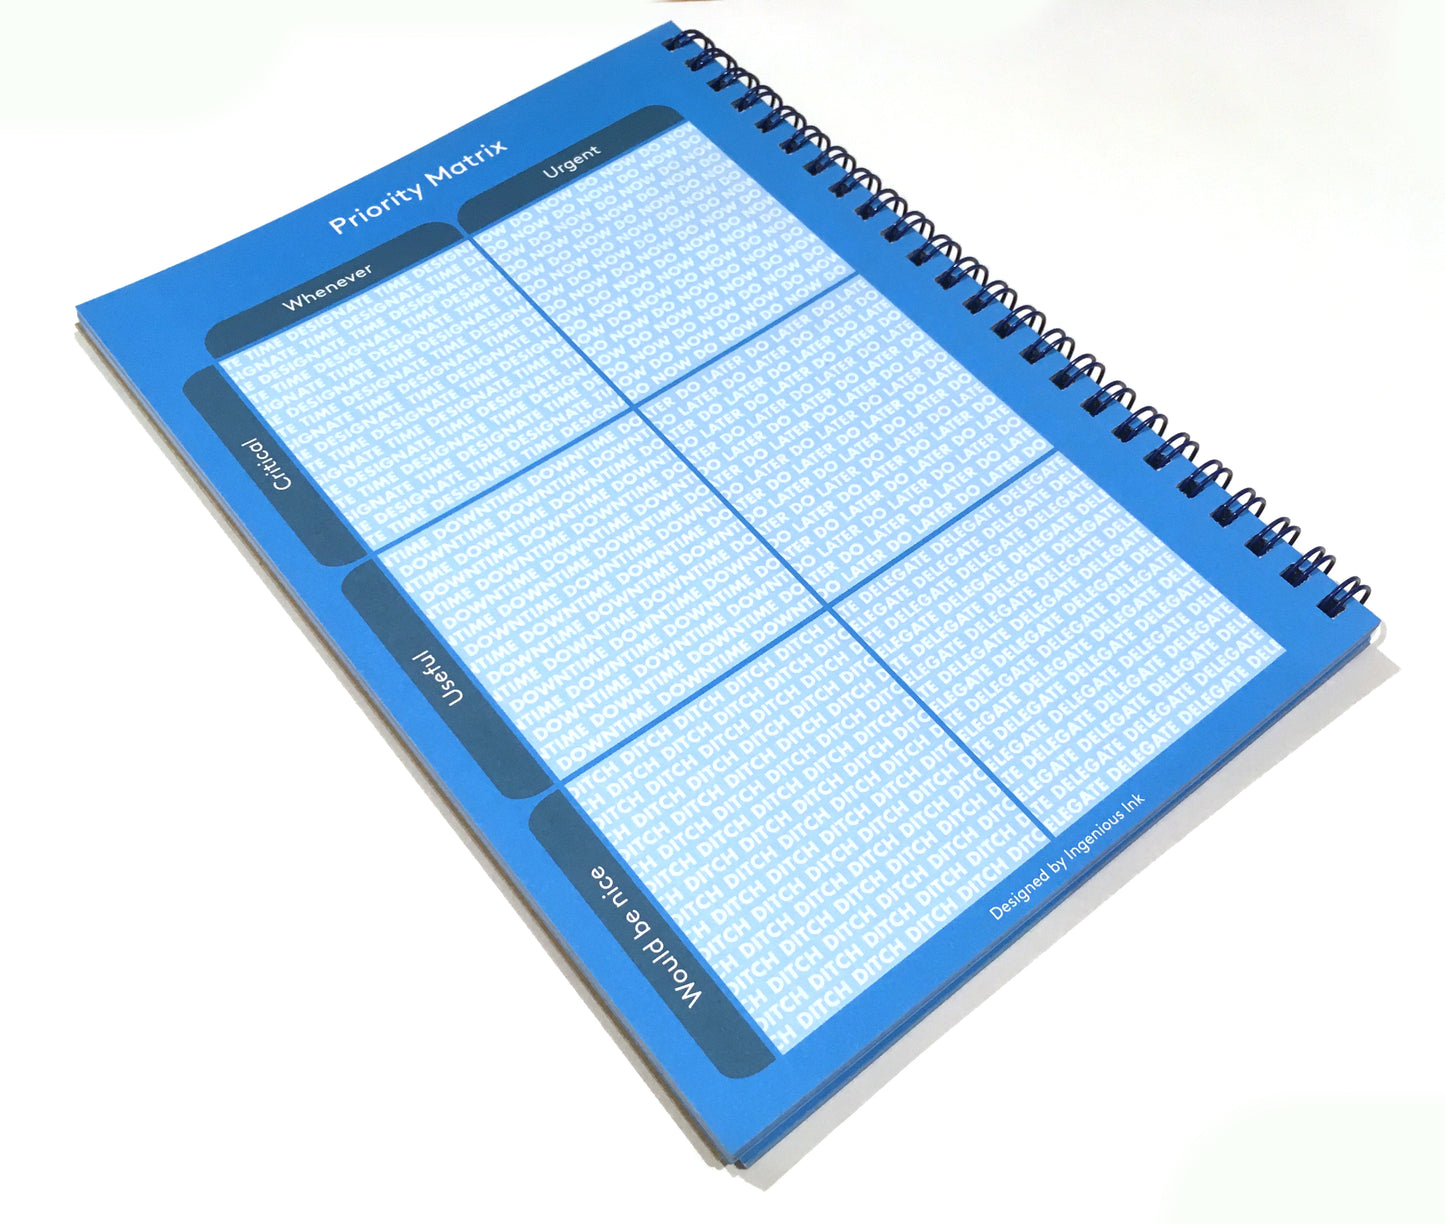 Paperthink / Matrix notebook